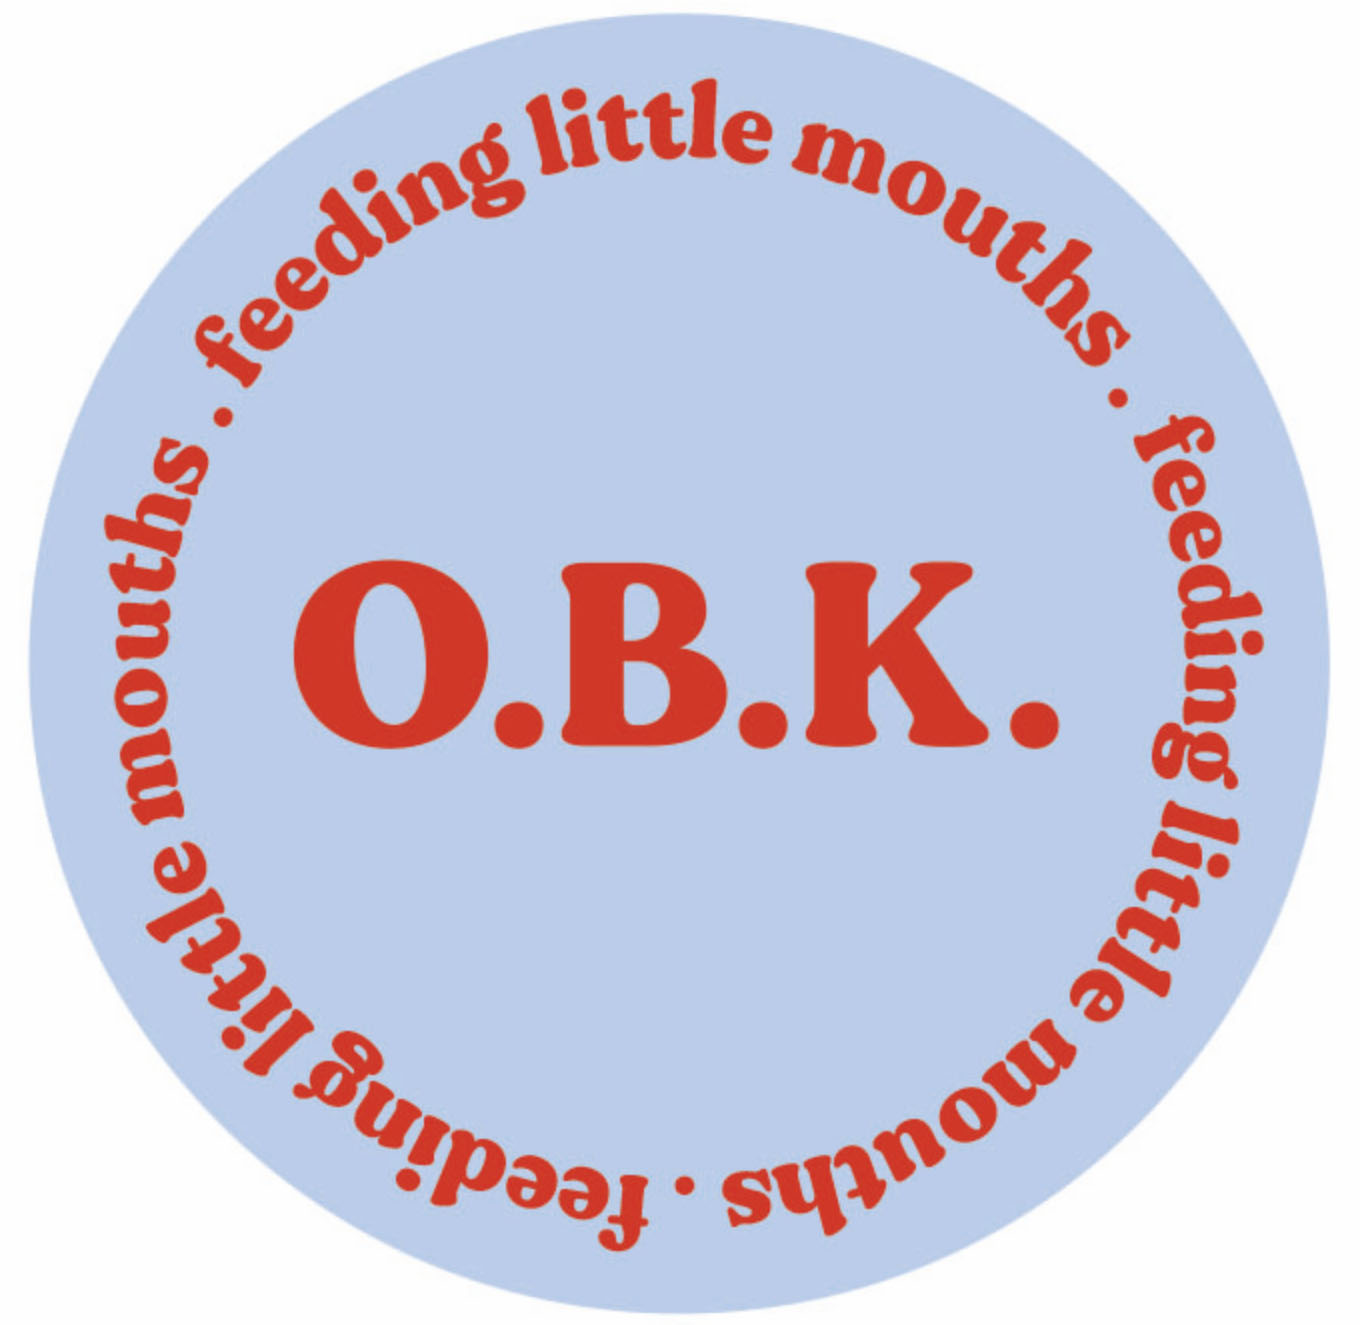 O.B.K. Feeding Little Mouths's logo